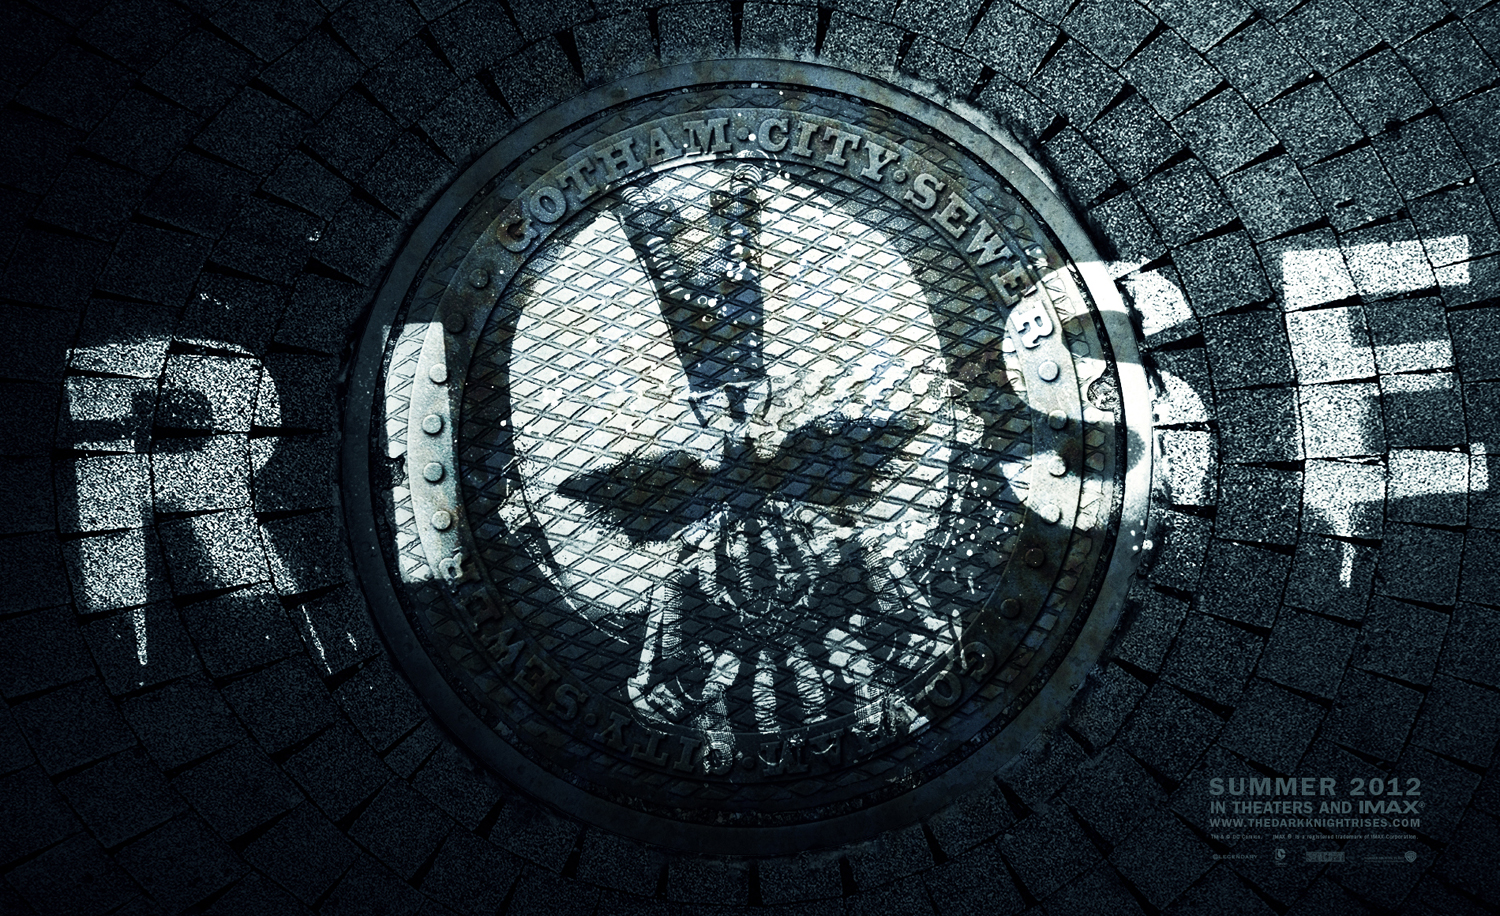 http://1.bp.blogspot.com/-SquGp38gfQU/T_Xx7YosGbI/AAAAAAAABBM/ITValOmhlqU/s1600/The-Dark-Knight-Rises-Bane-Manhole-Banner.jpg